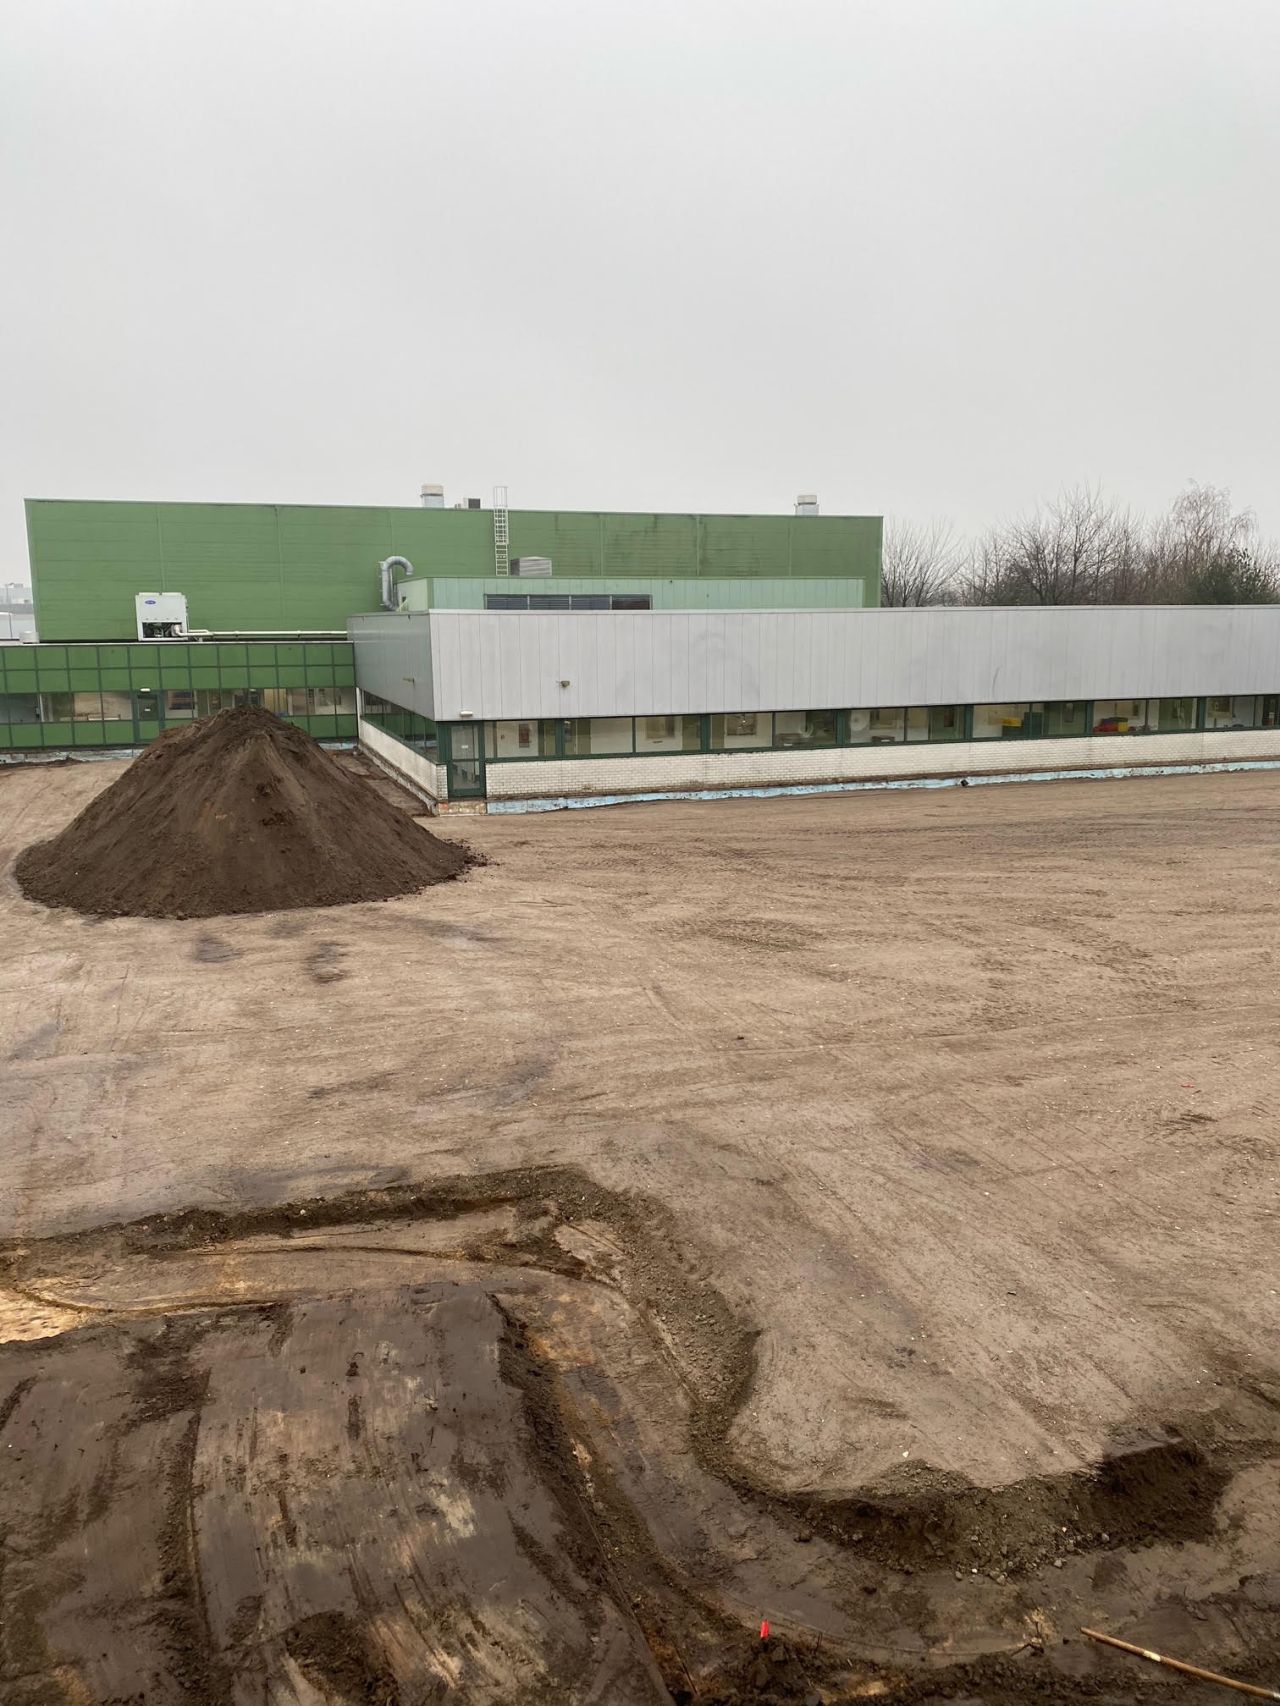 Tjoapack invests over €10m into Etten-Leur facility